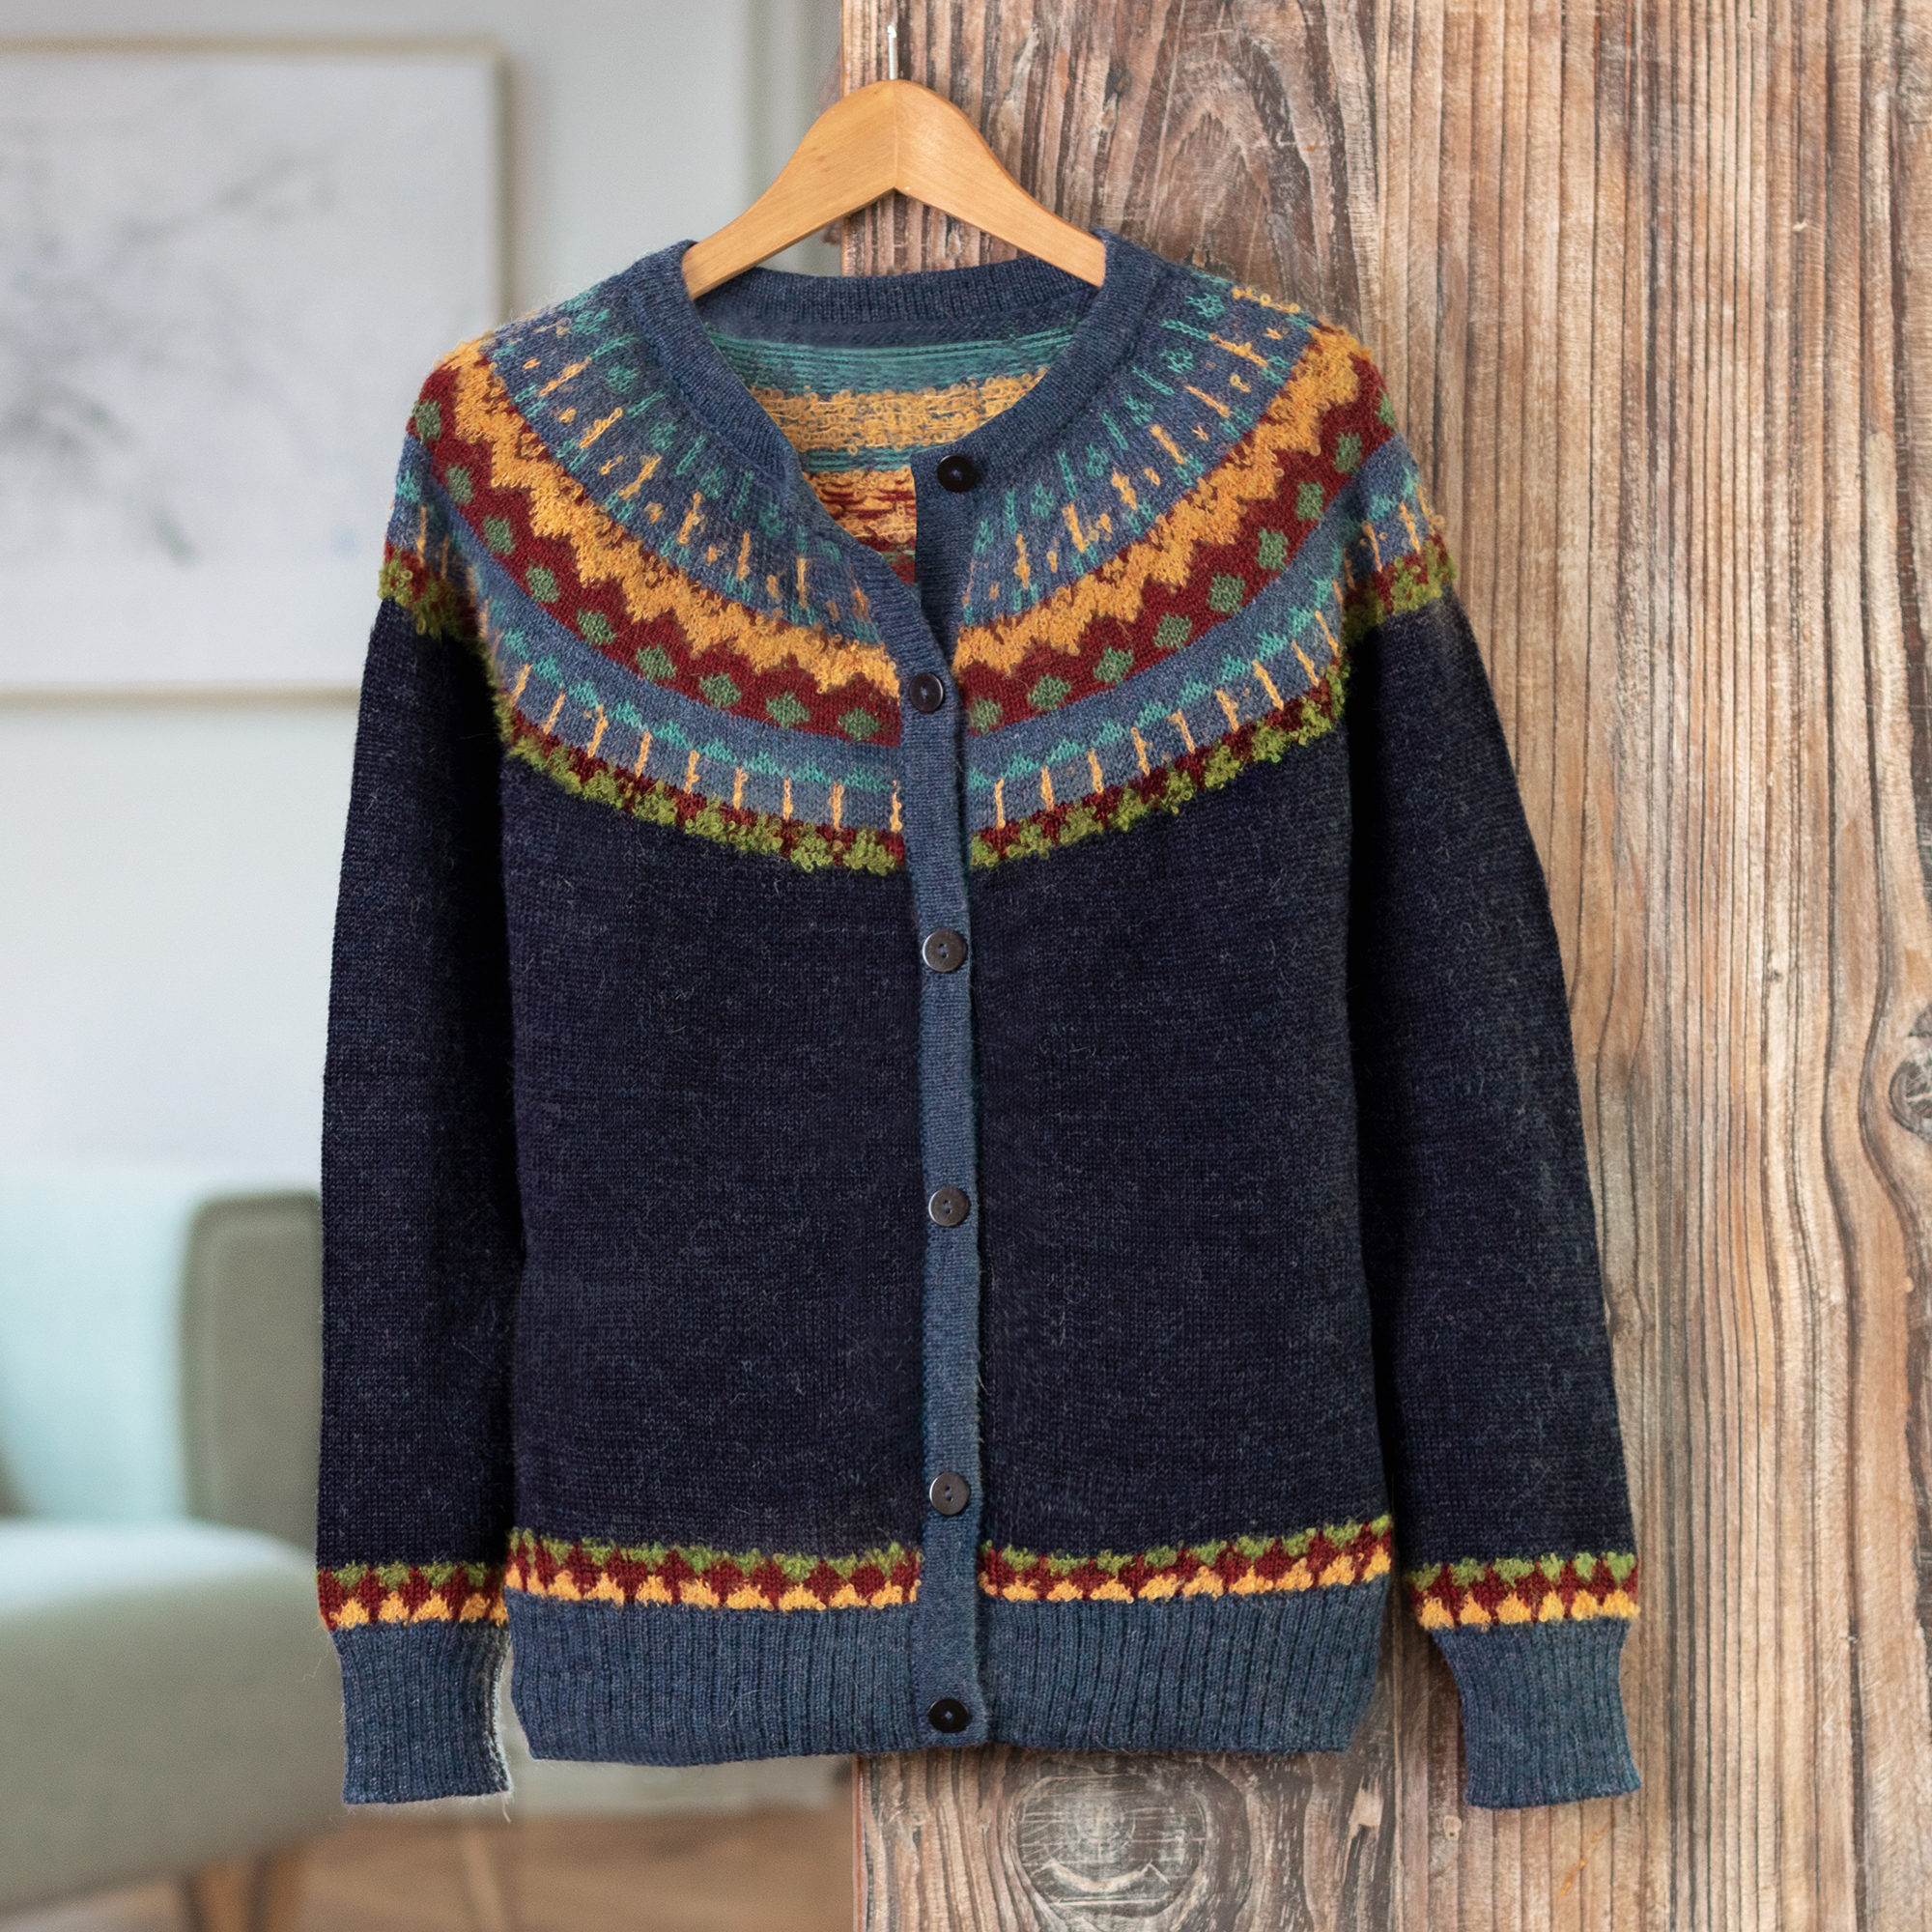 100% Alpaca Yoke Cardigan Sweater with Buttons From Peru - Blue